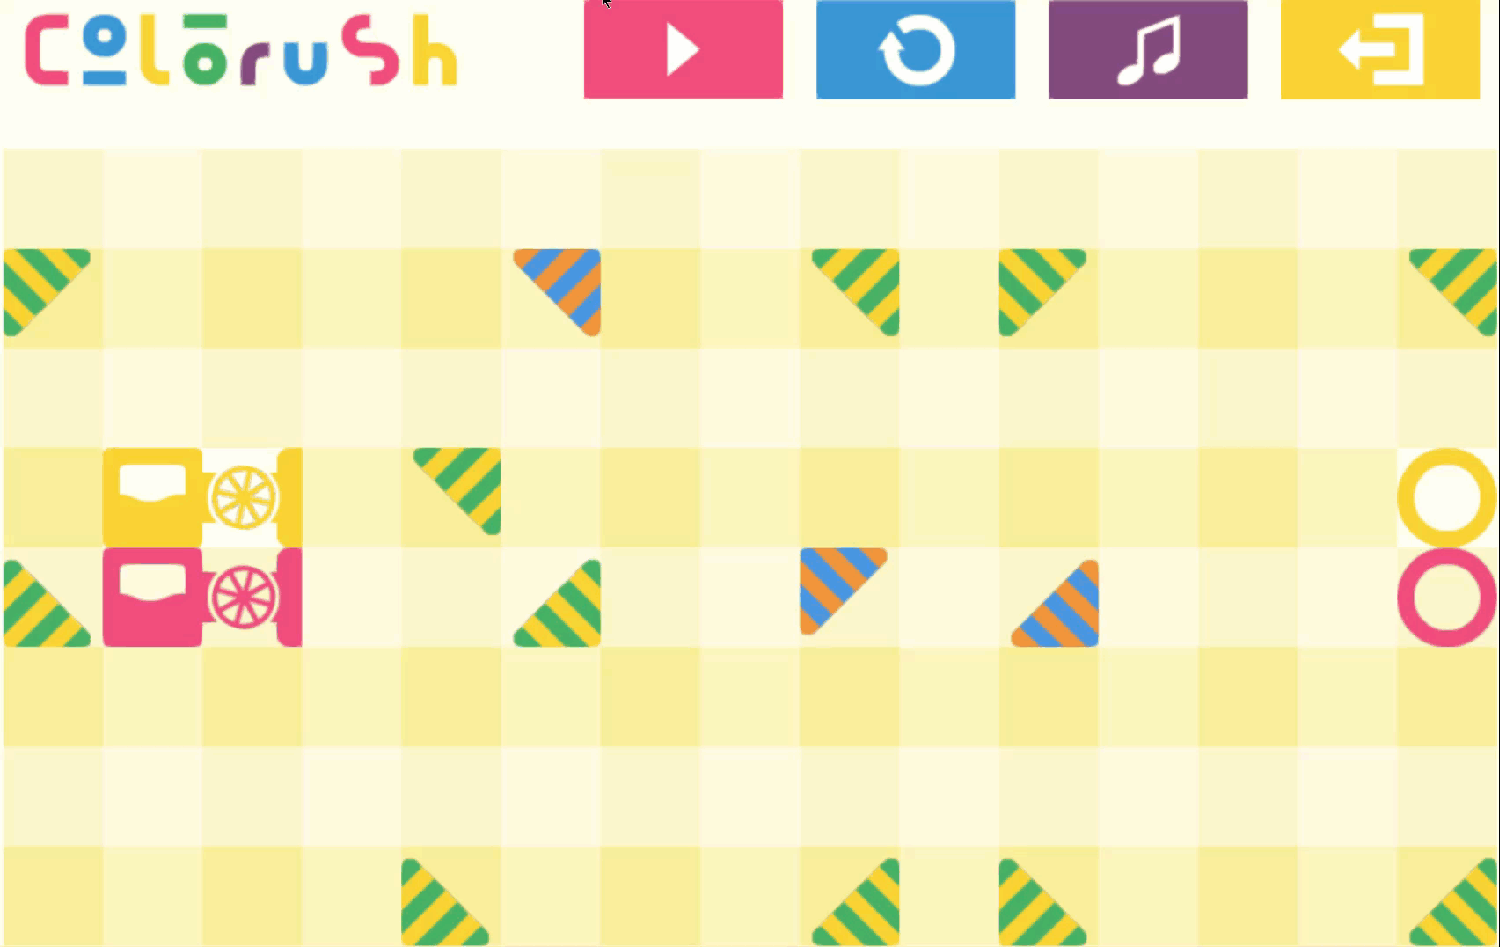 Colorush Game Level 11 Screenshot.